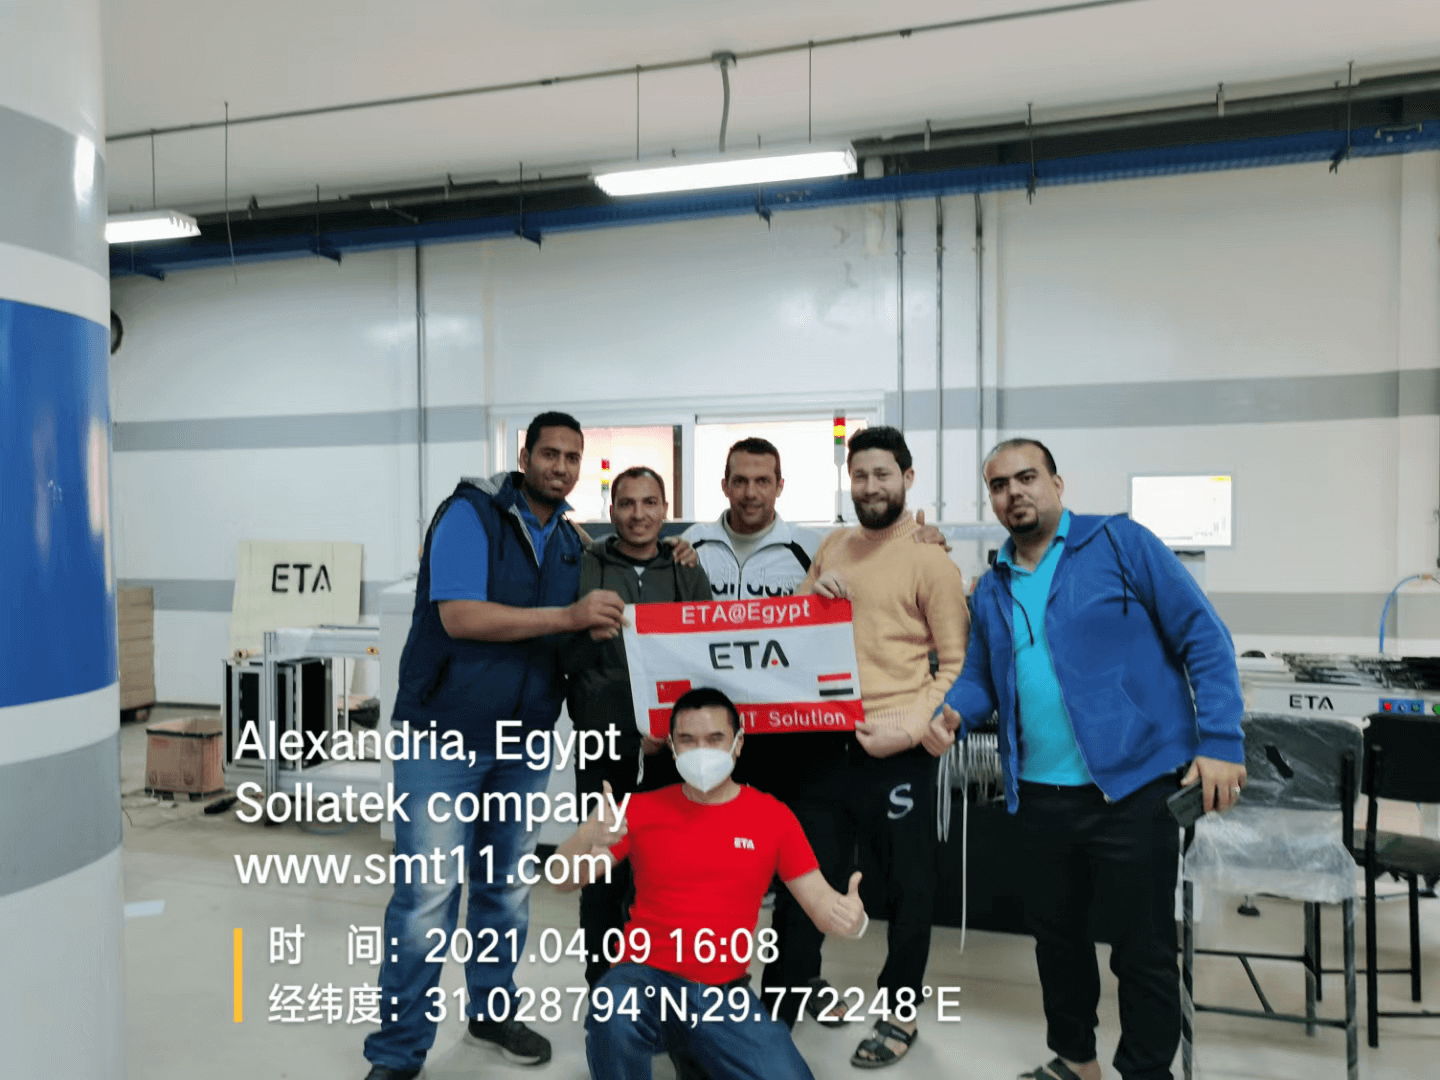 7 ETA Global Service in Egypt